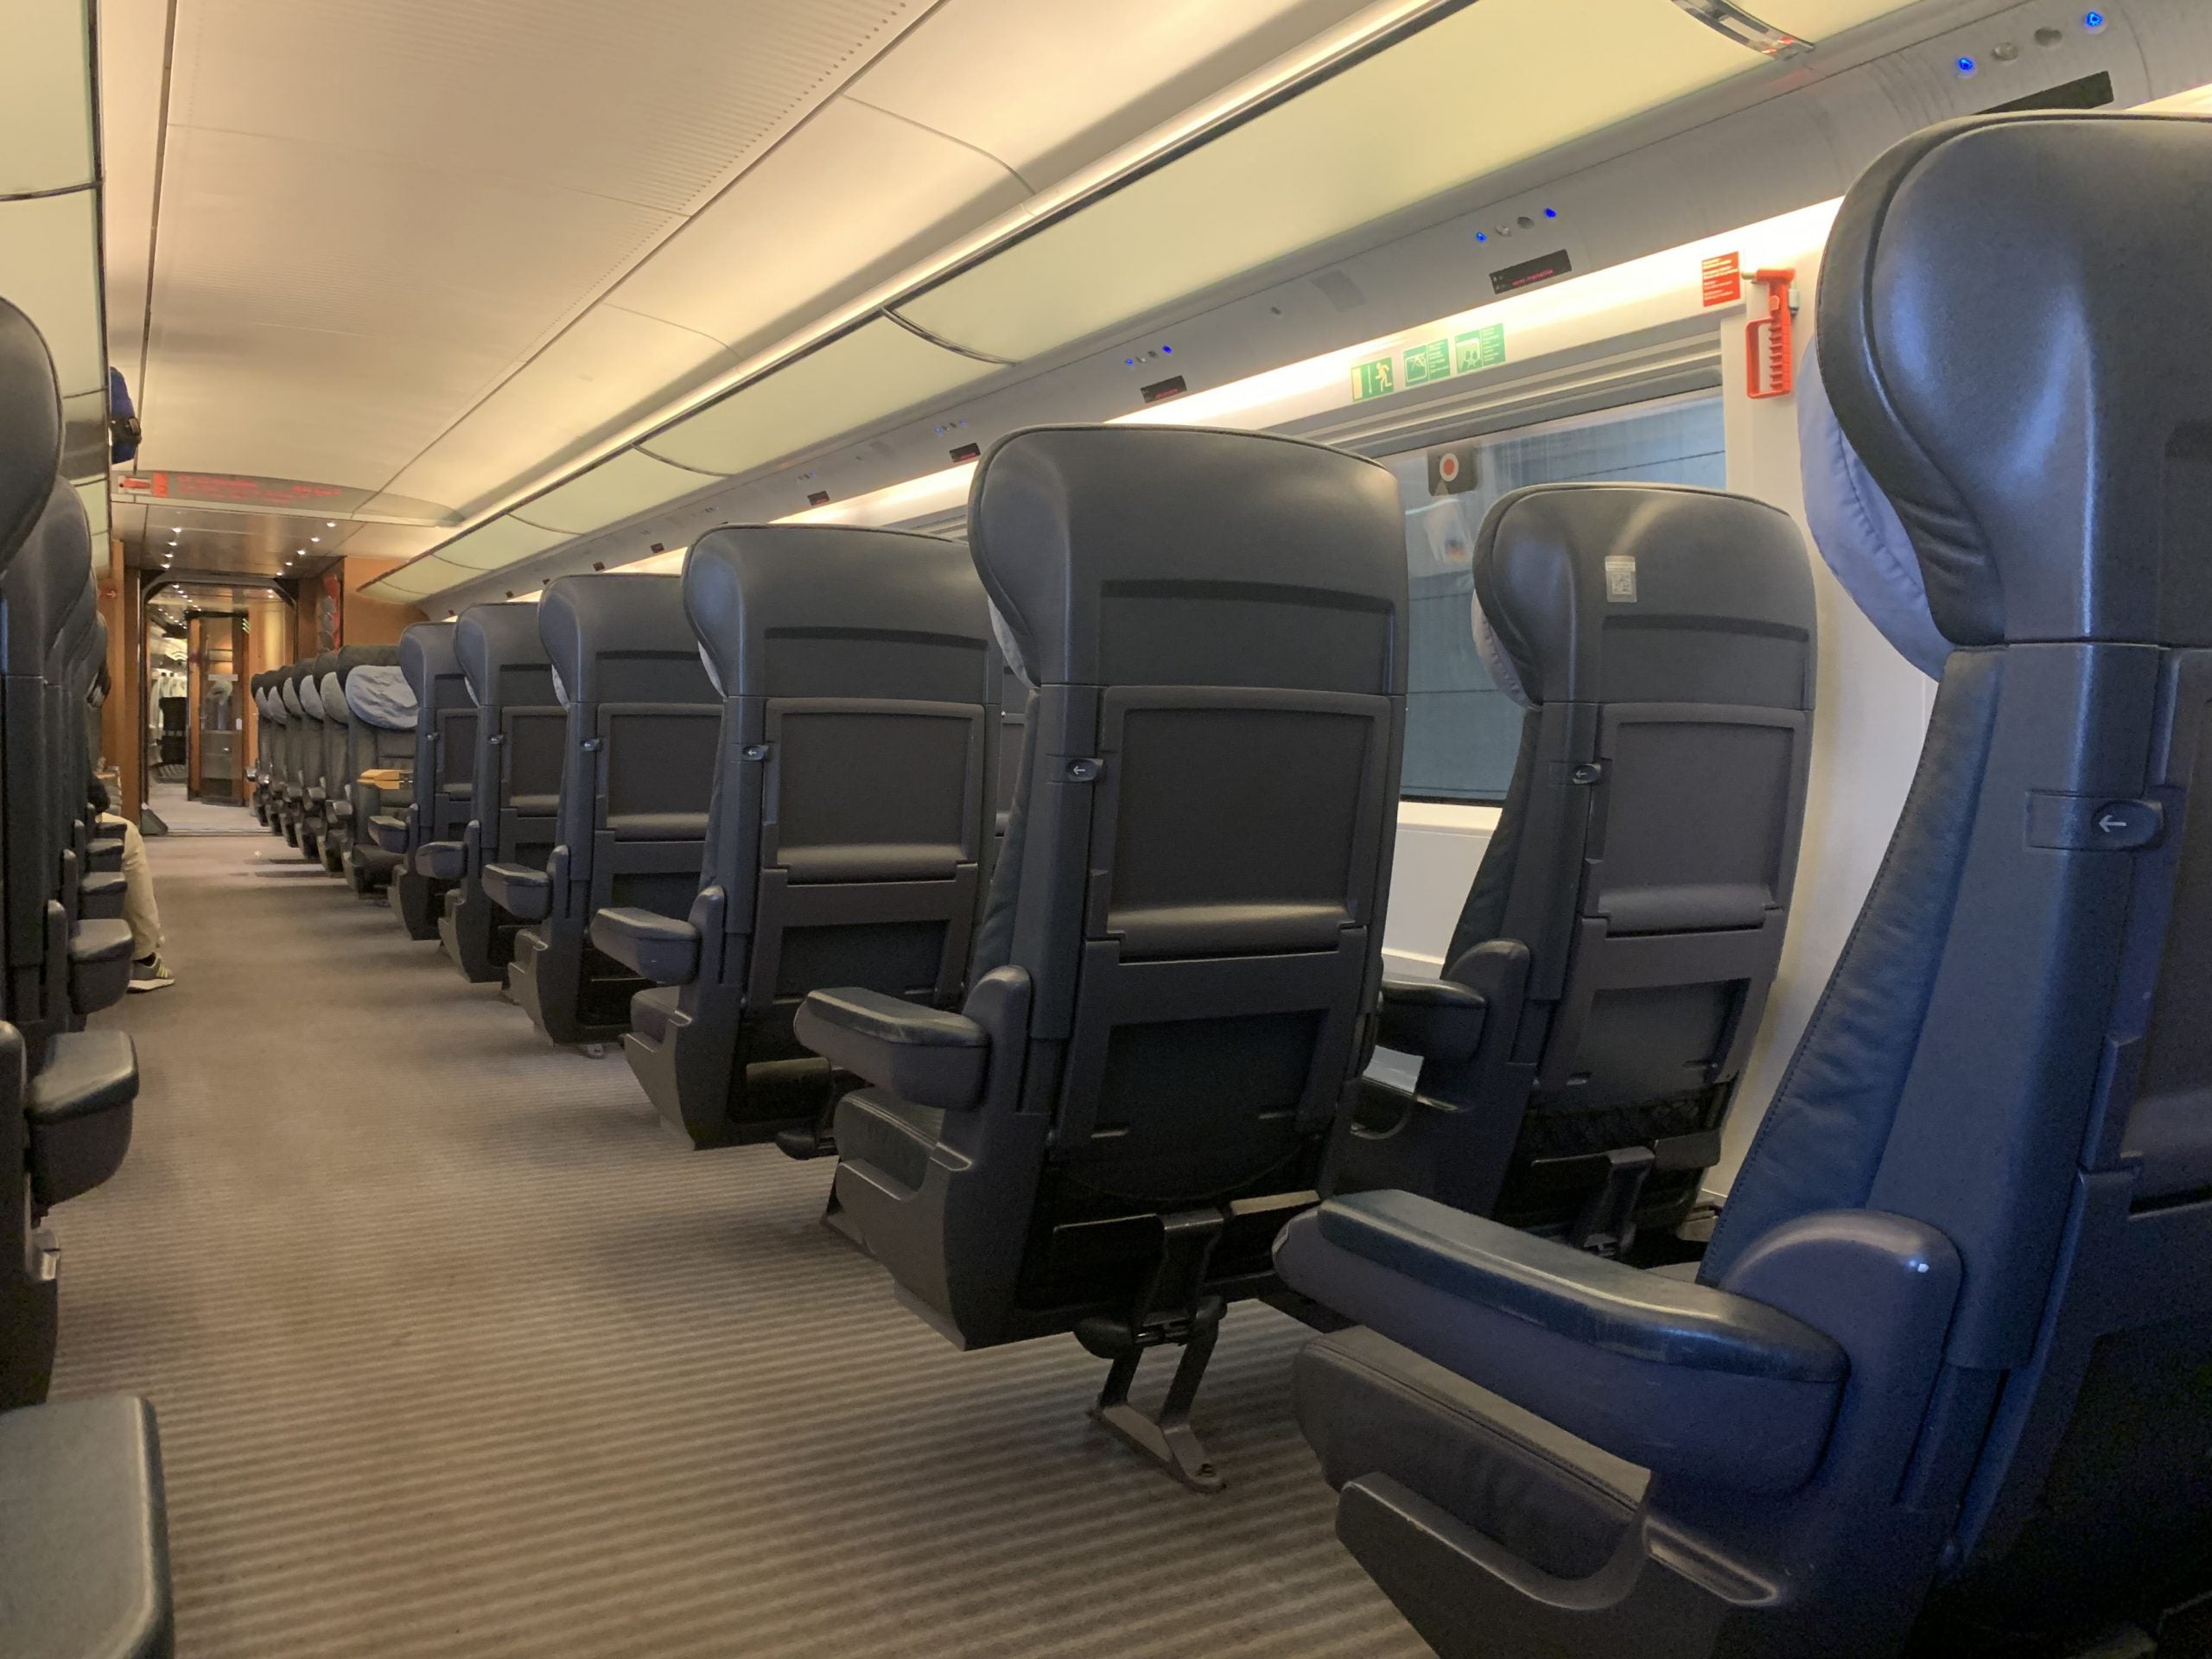 My train from Frankfurt to Amsterdam.